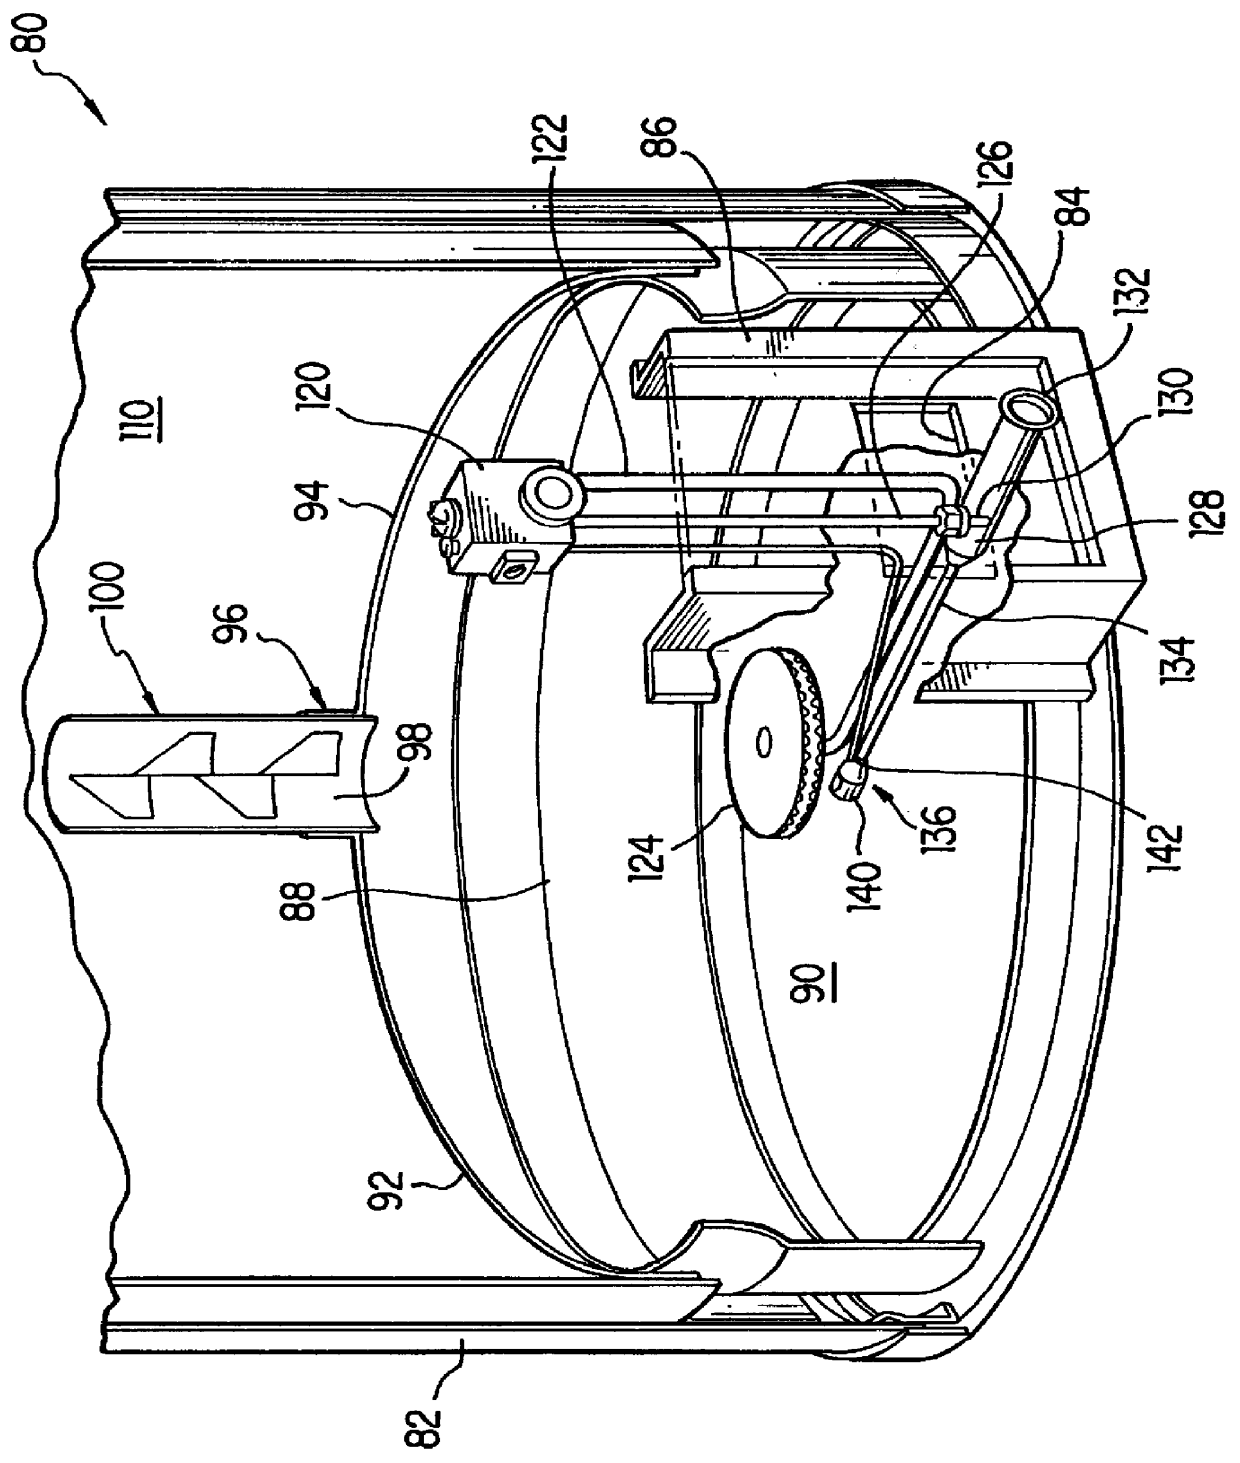 Pilot burner apparatus and method for operating